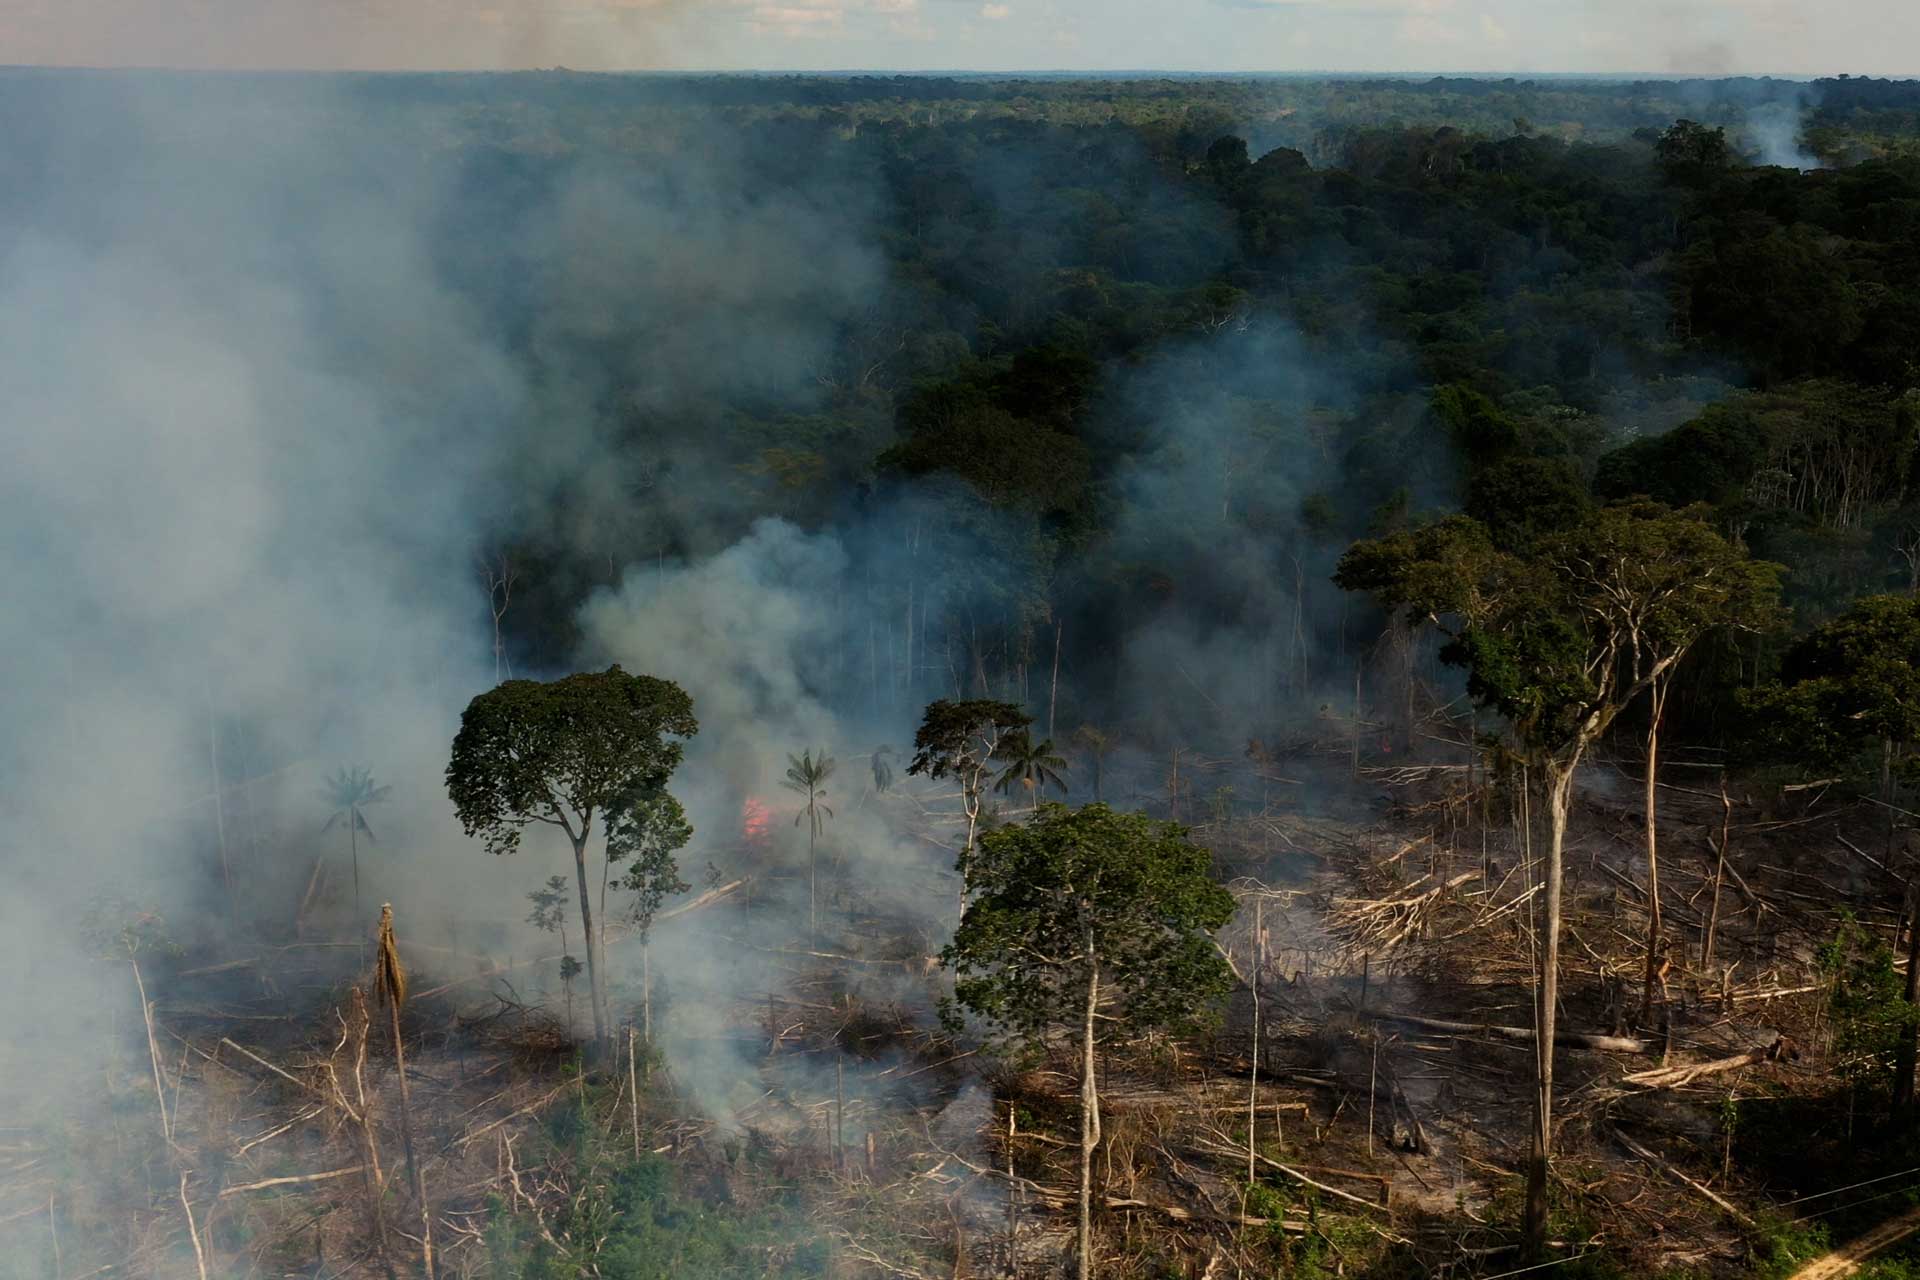 Image of deforestation from SLAY documentary film